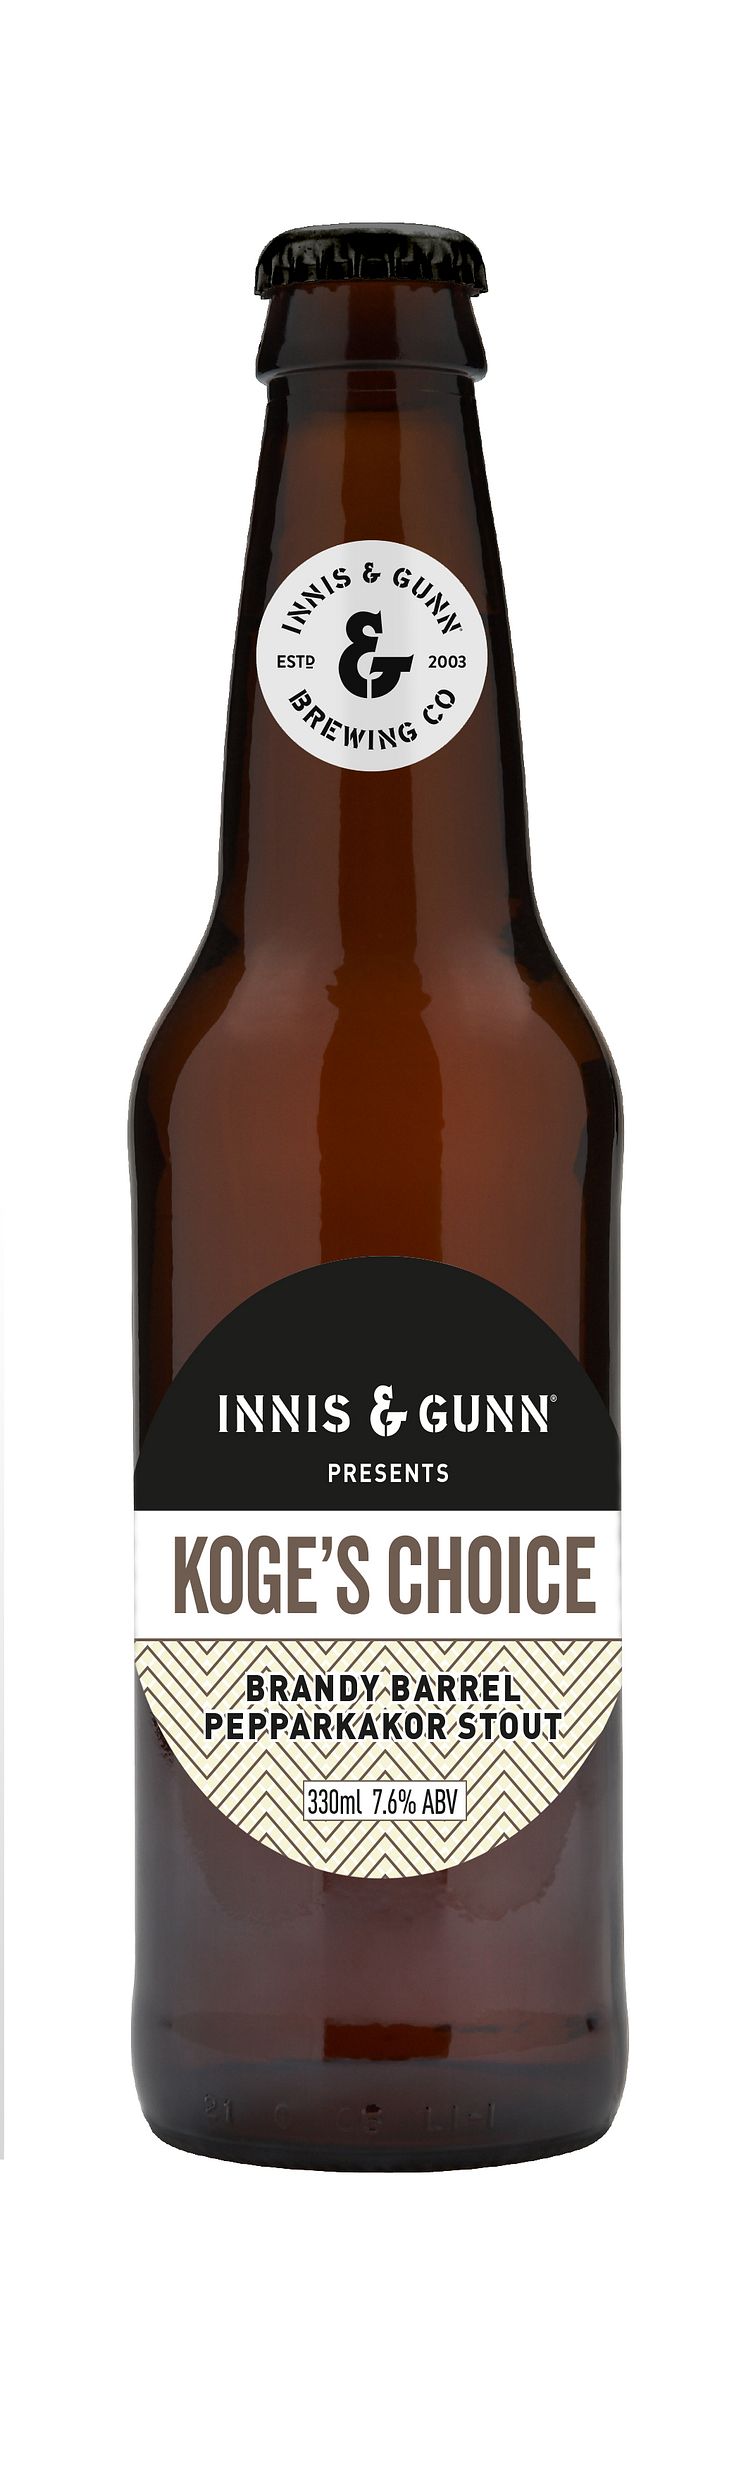 Koge's Choice - bottleshot